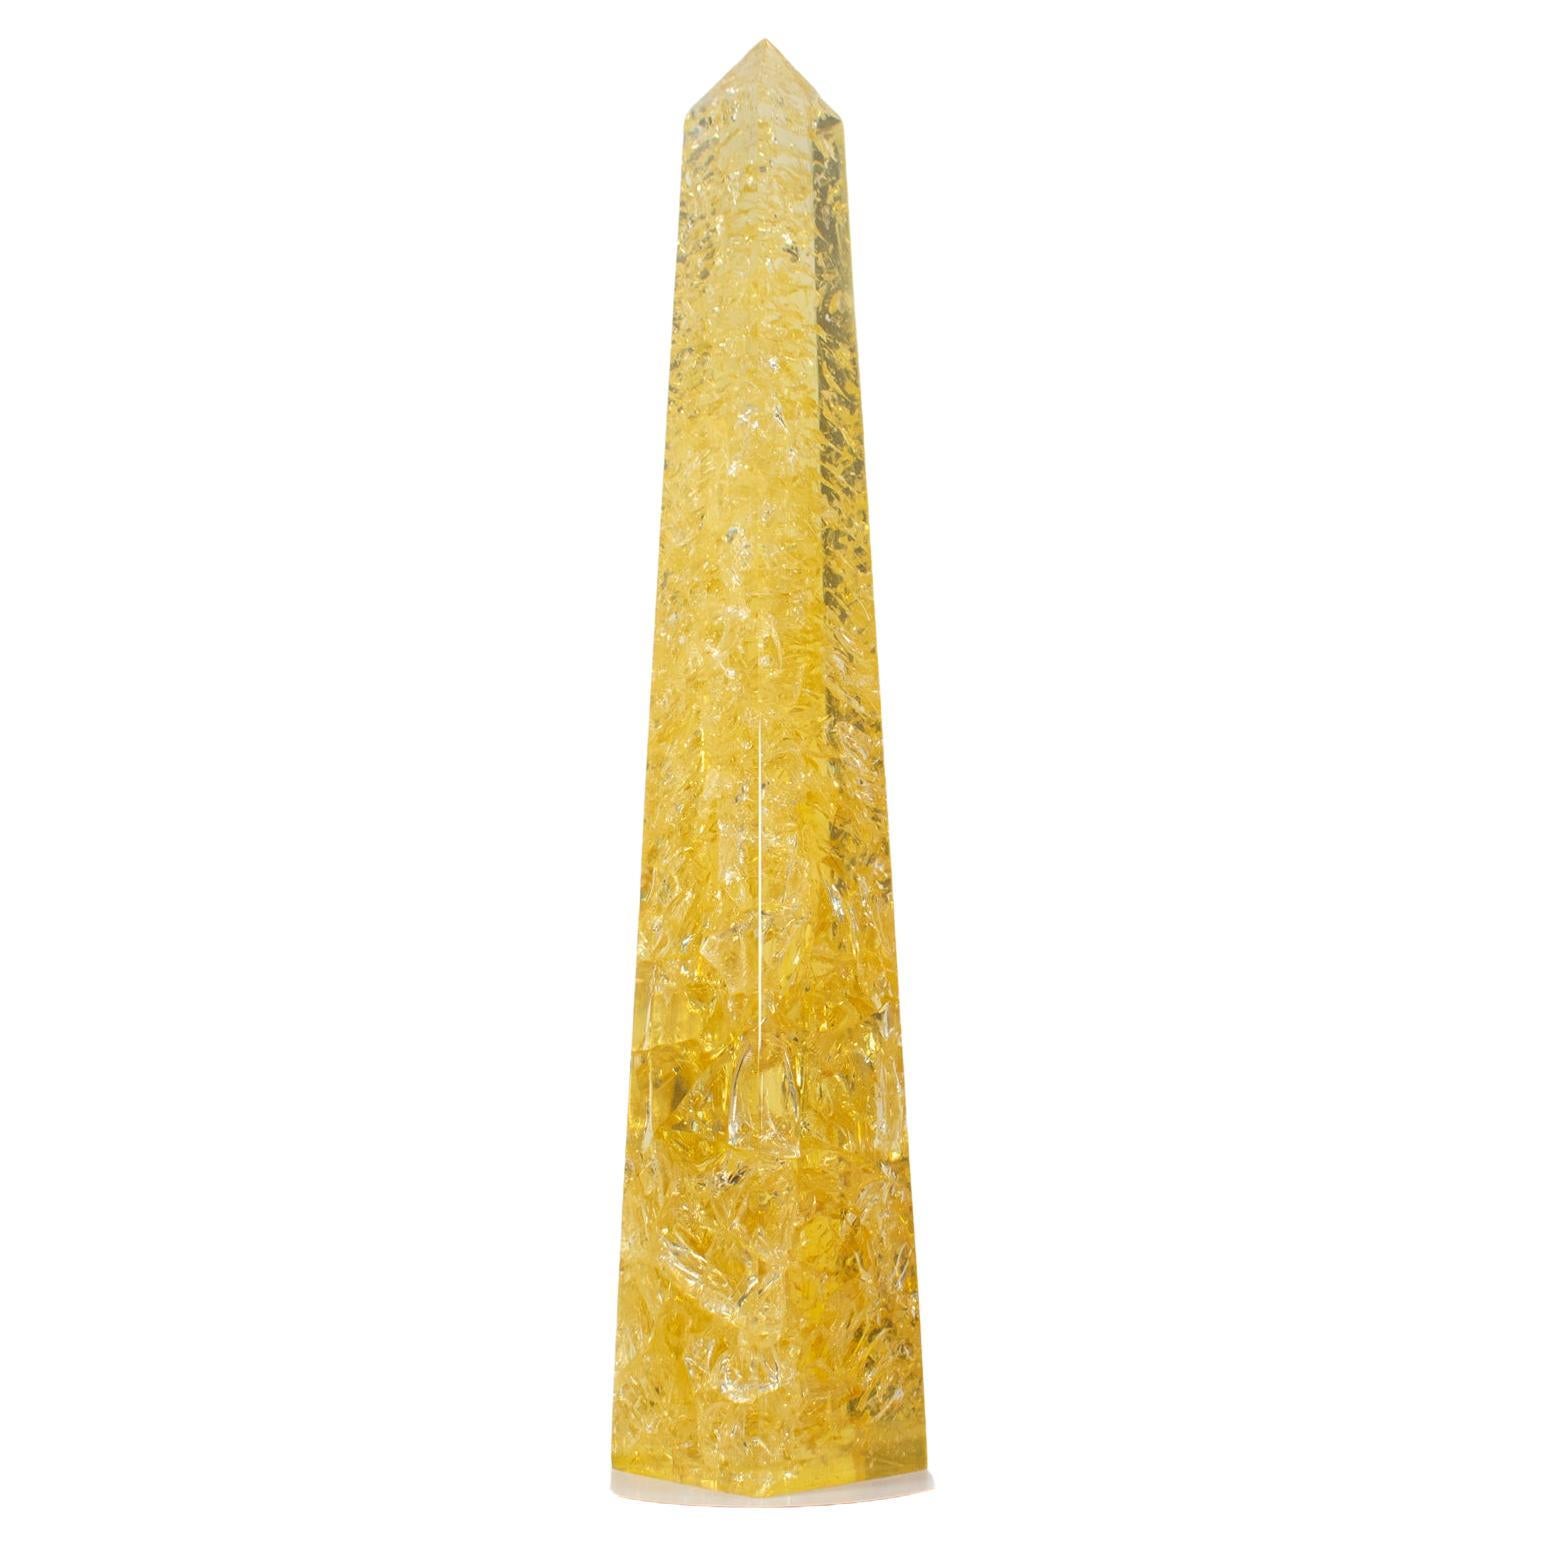 Oversized Yellow Fractal Resin Obelisk by Pierre Giraudon, 1970s For Sale